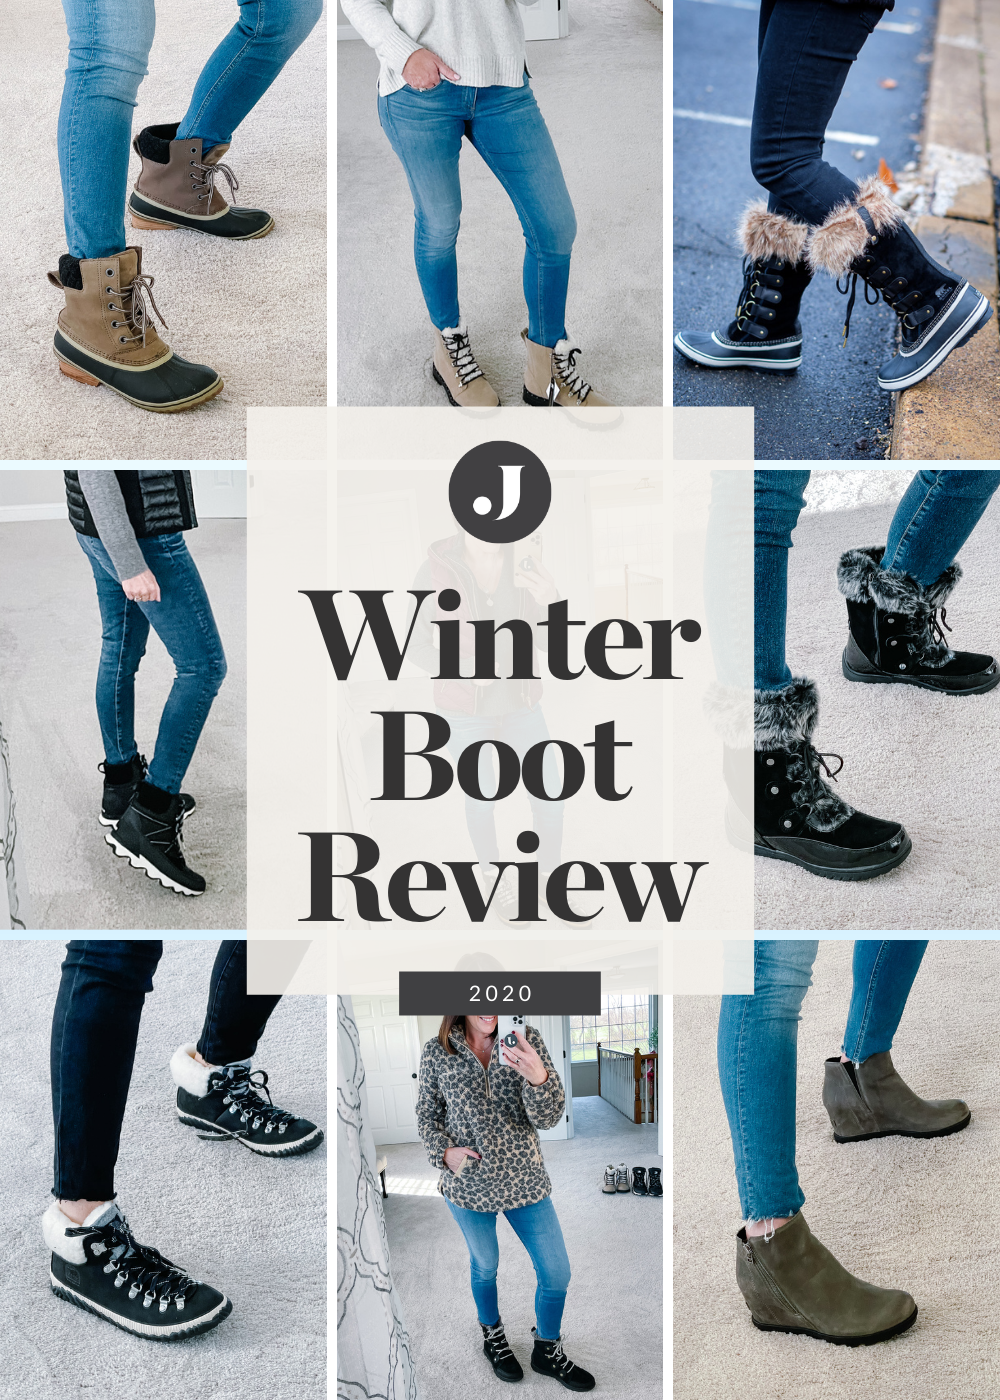 Winter Boot Review Comparison 